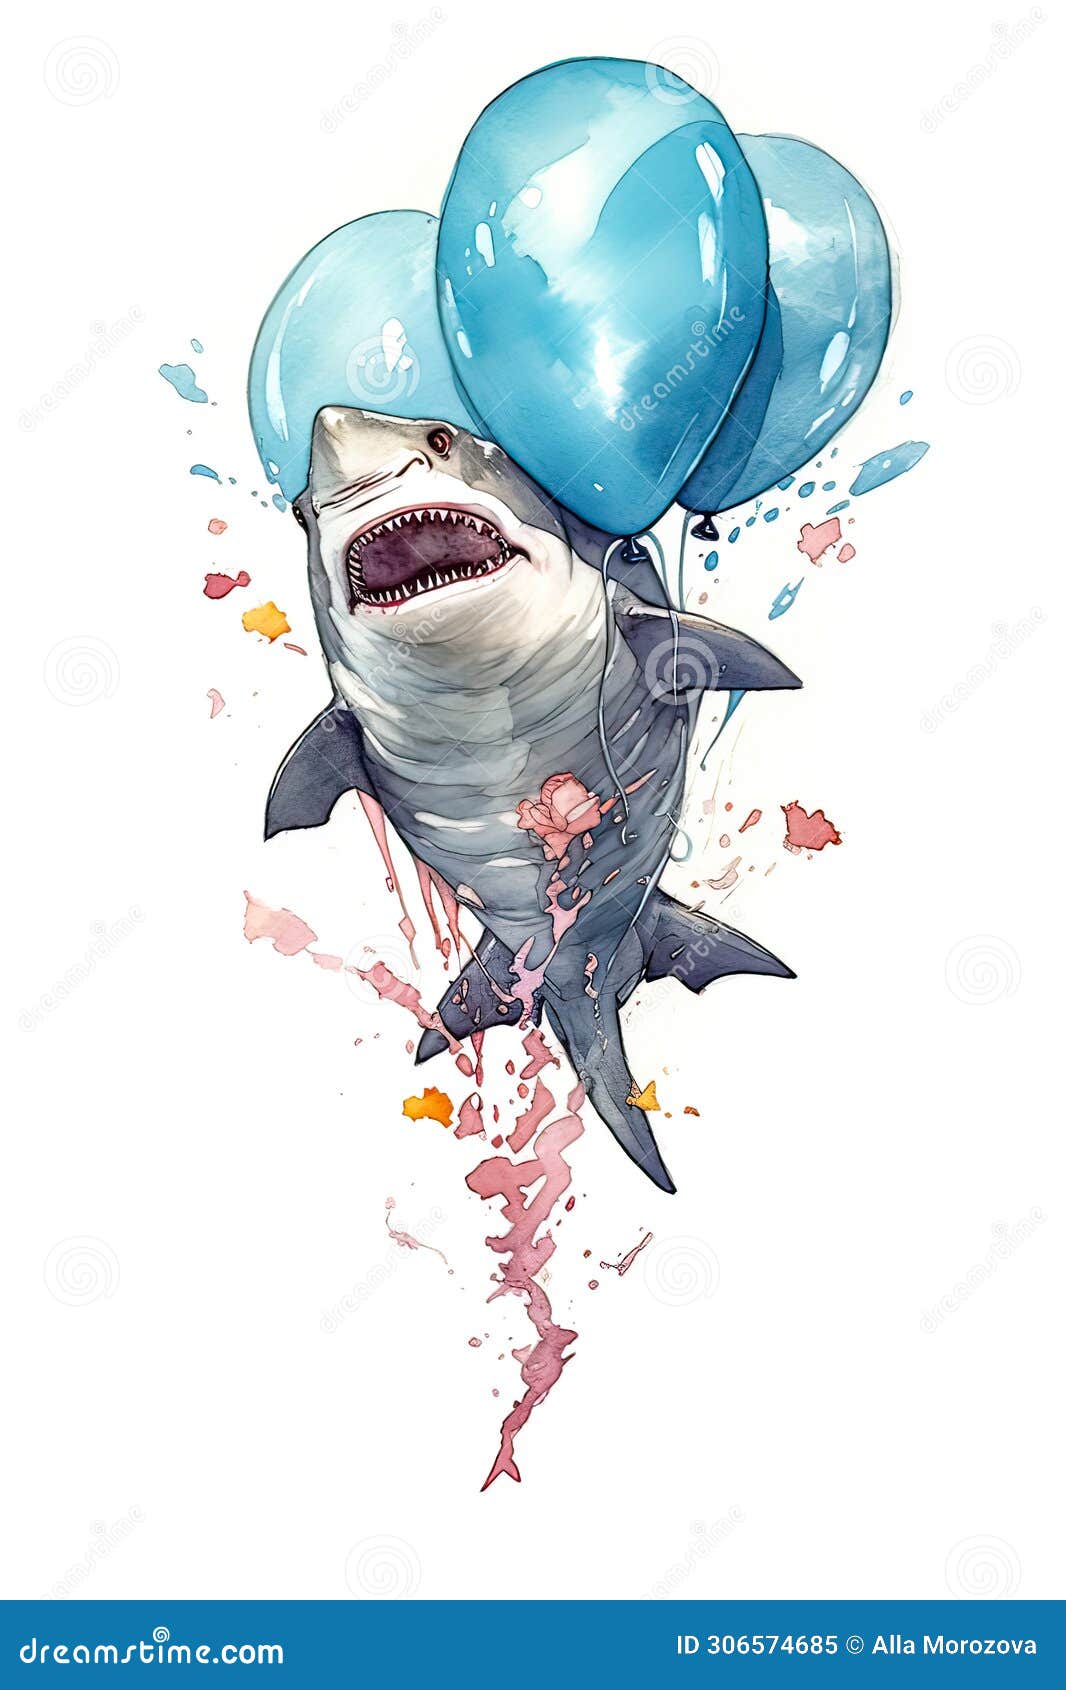 157 Watercolor Shark Stock Photos - Free & Royalty-Free Stock